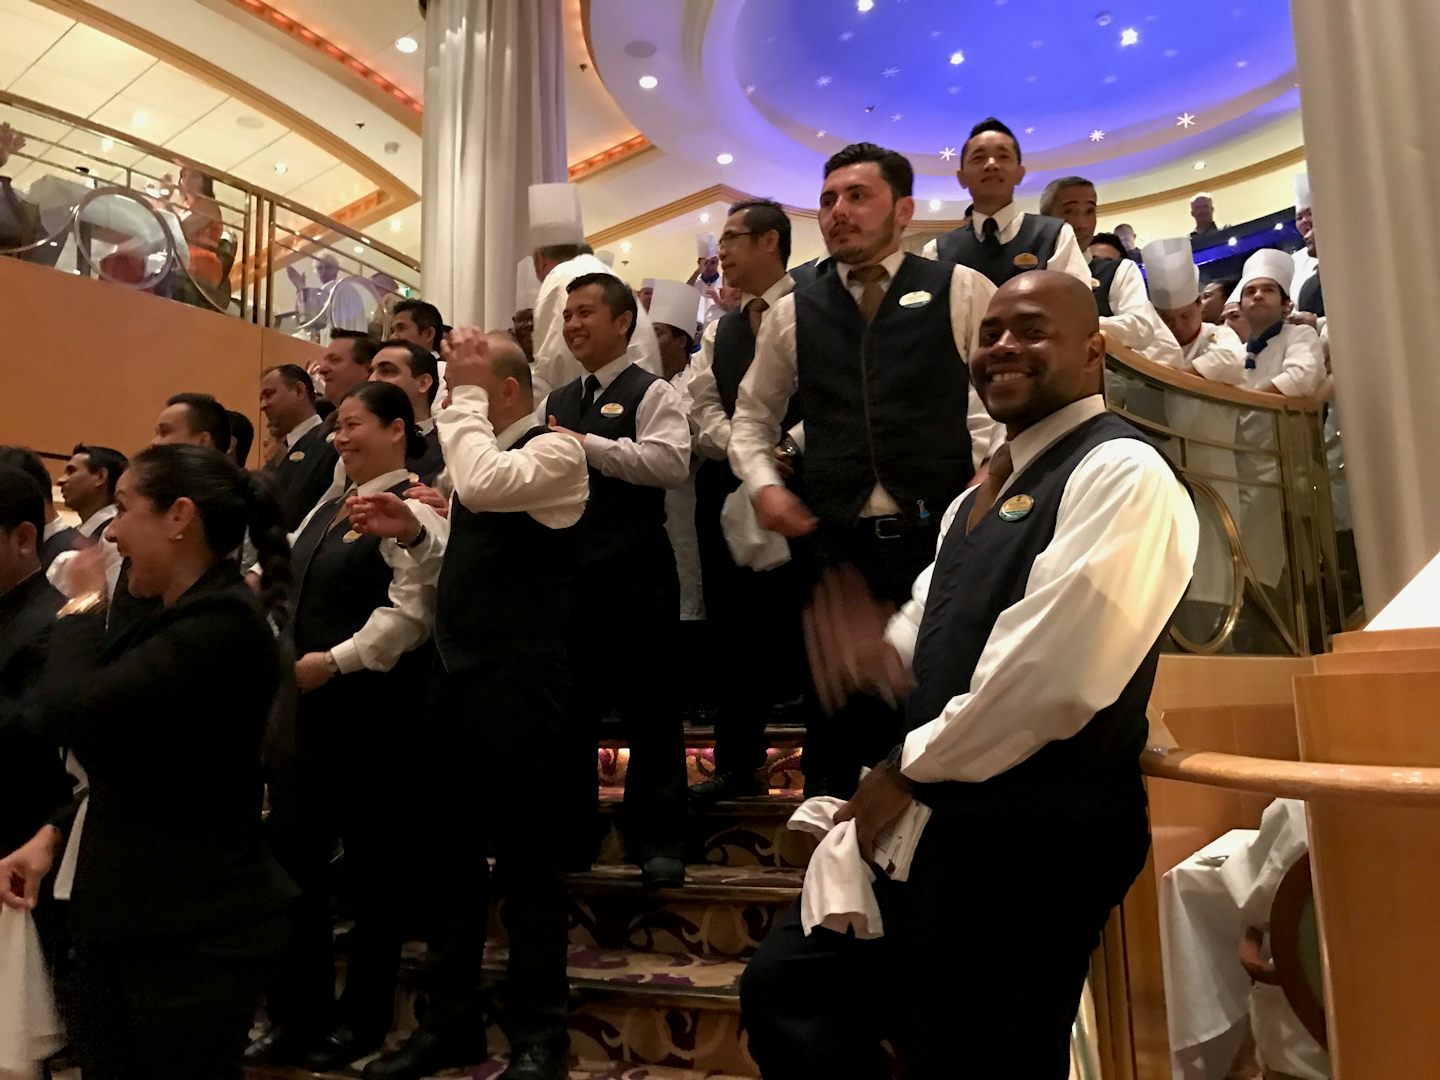 Singing waiters Italian night